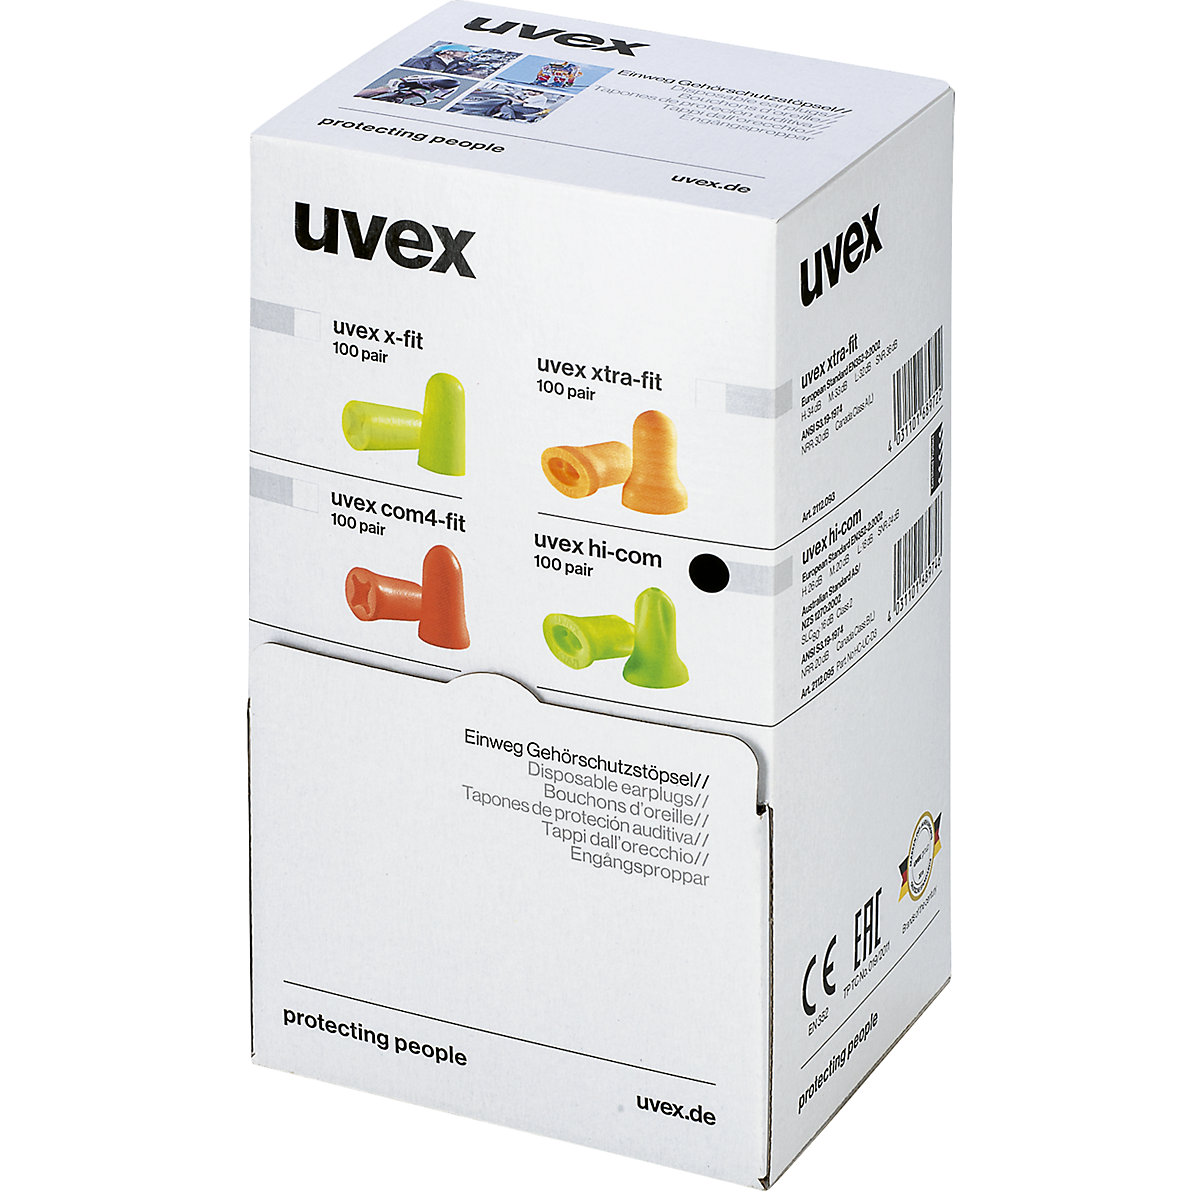 Zátky pro ochranu sluchu hi-com – Uvex